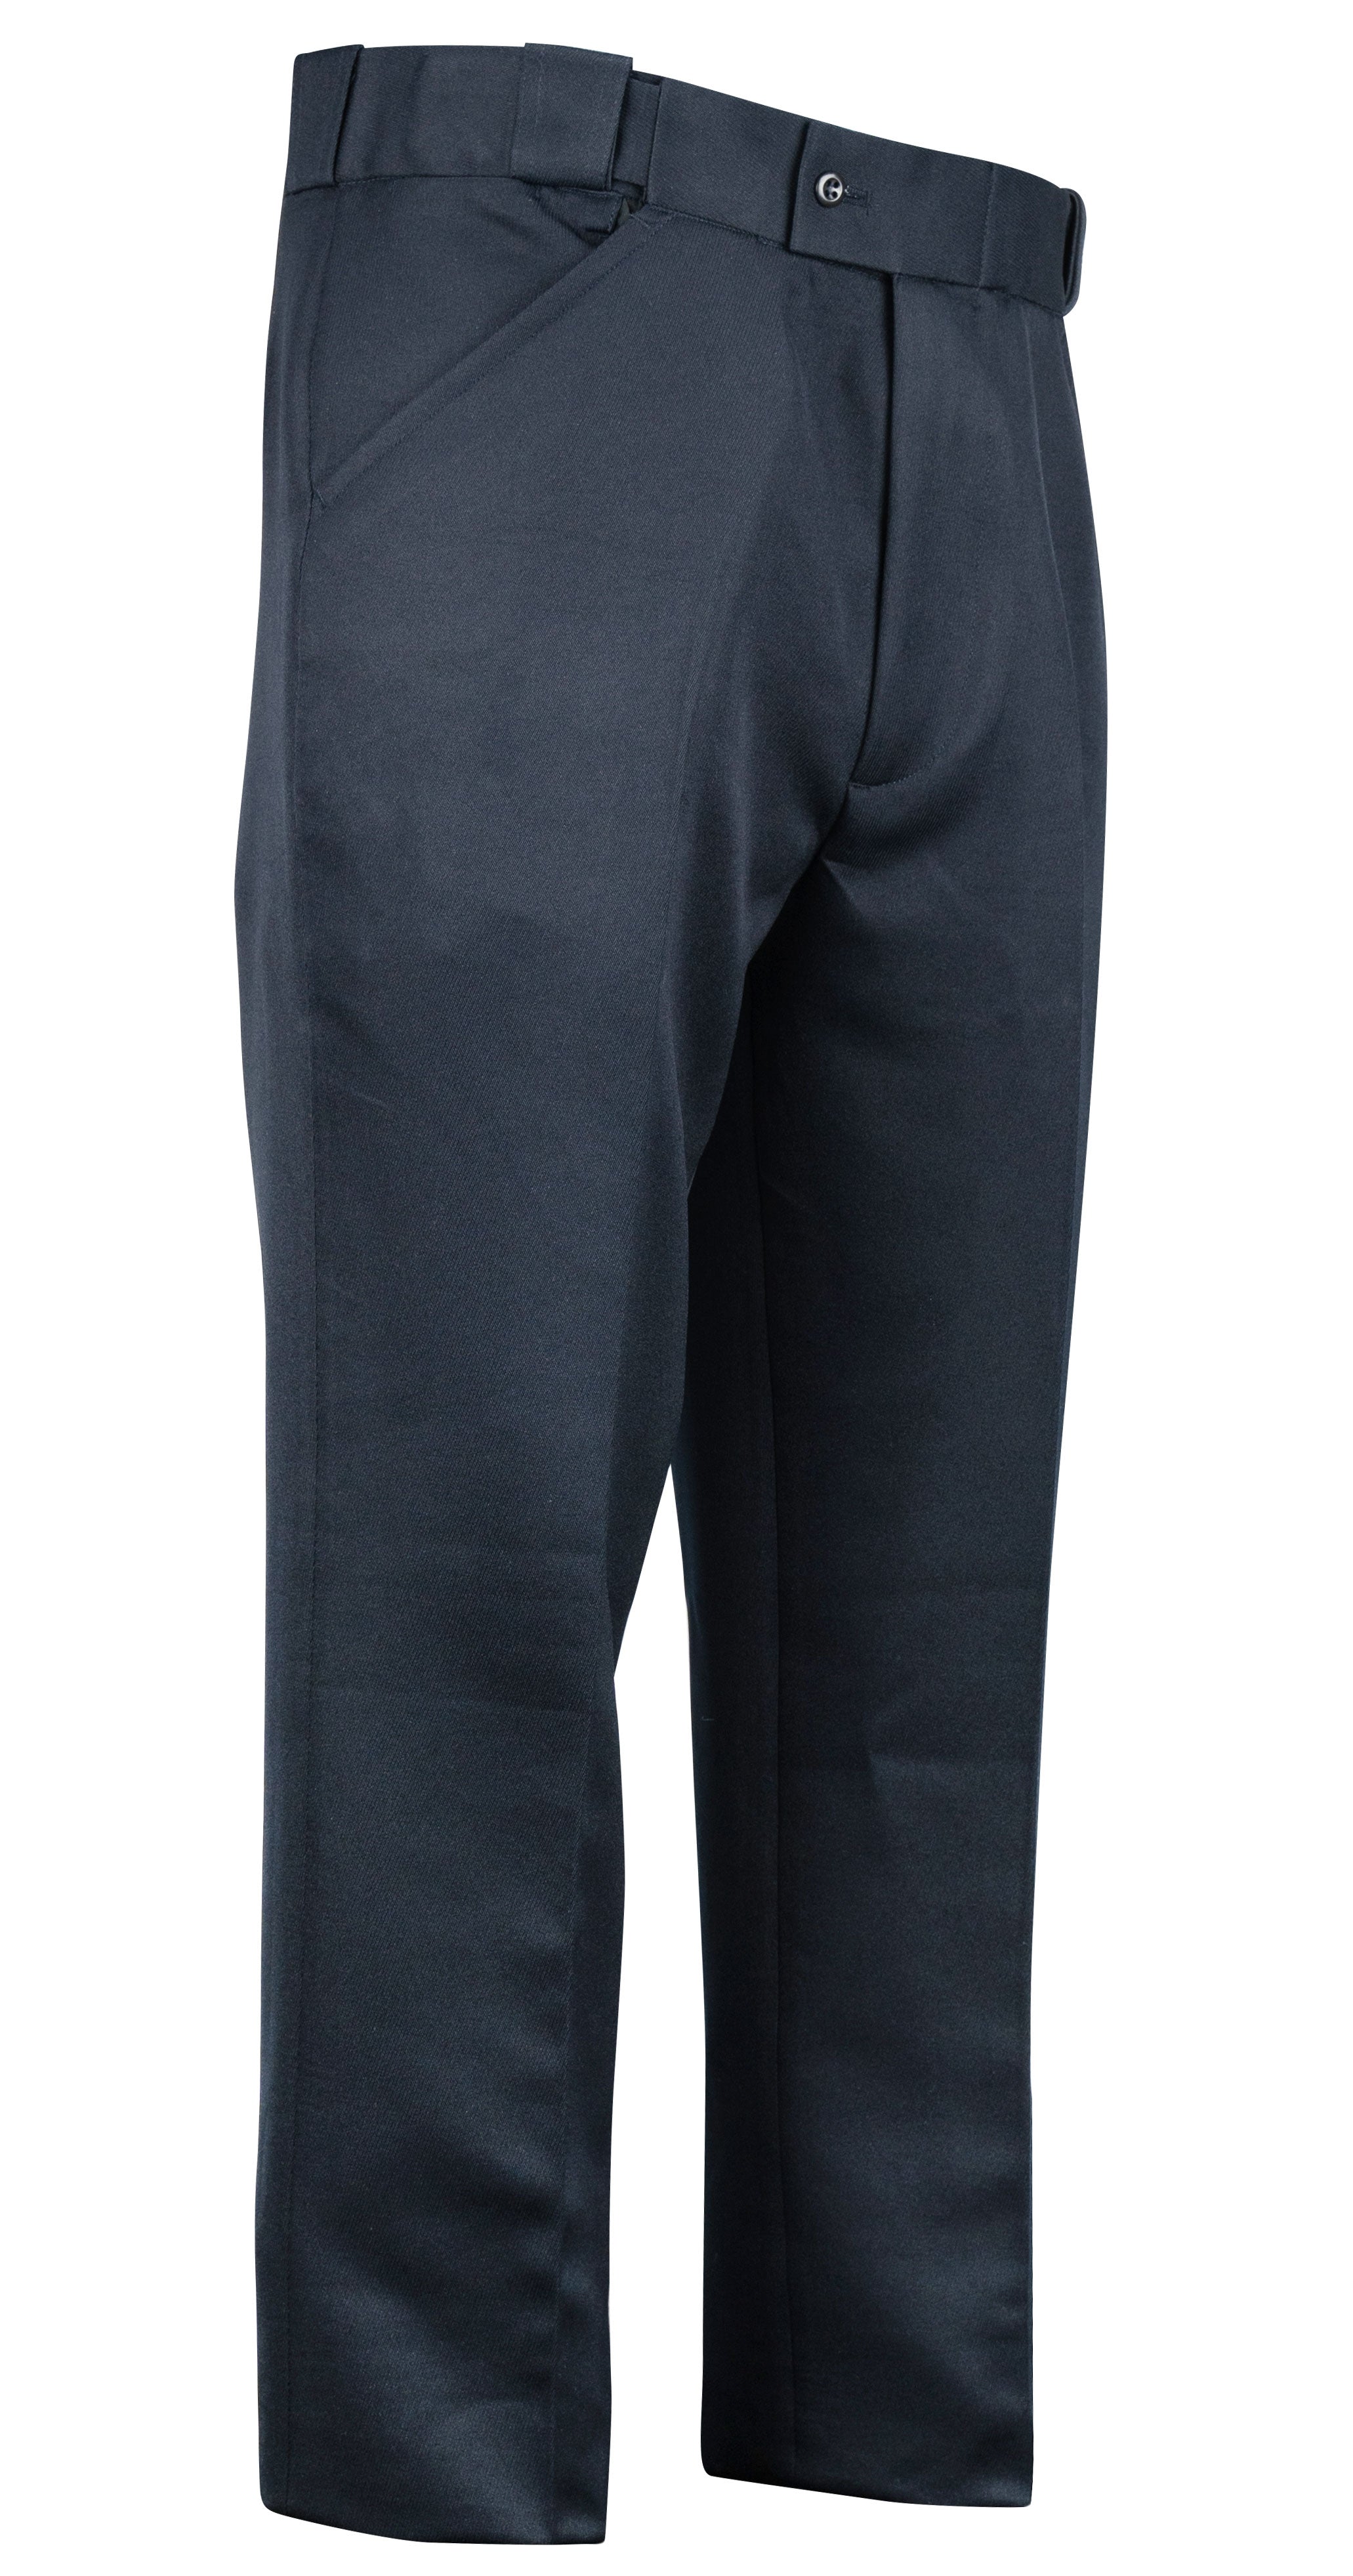 First Class MTA Western Pocket Pants (Navy Blue) – Security Uniform